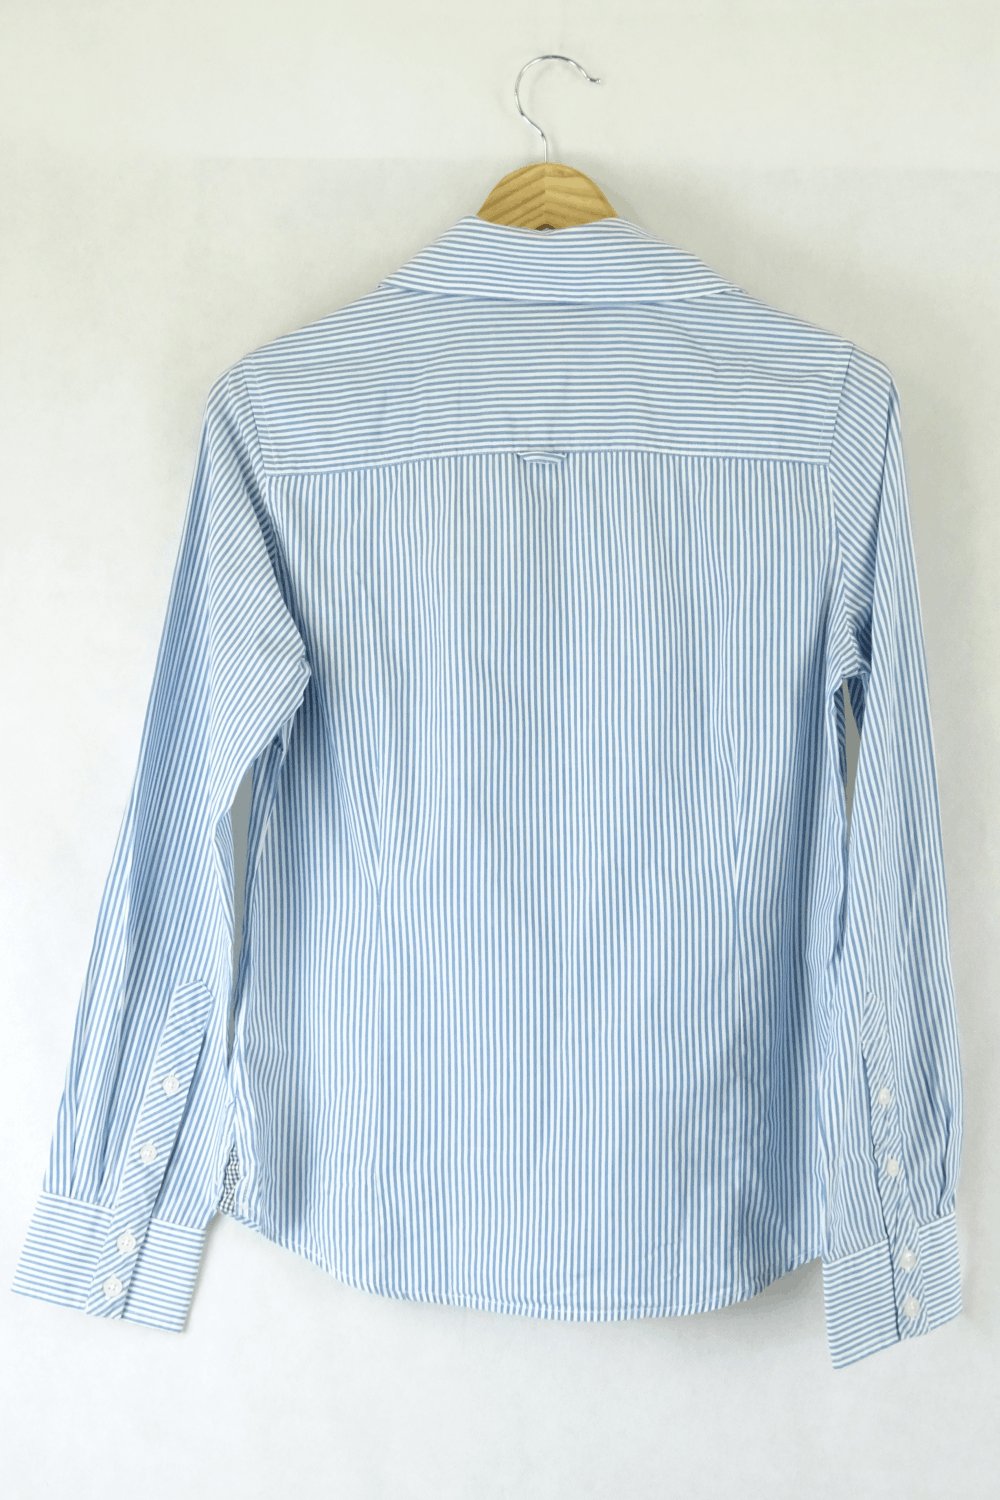 Ben Sherman Blue and White Stripe Long Sleeve Collar Shirt 8